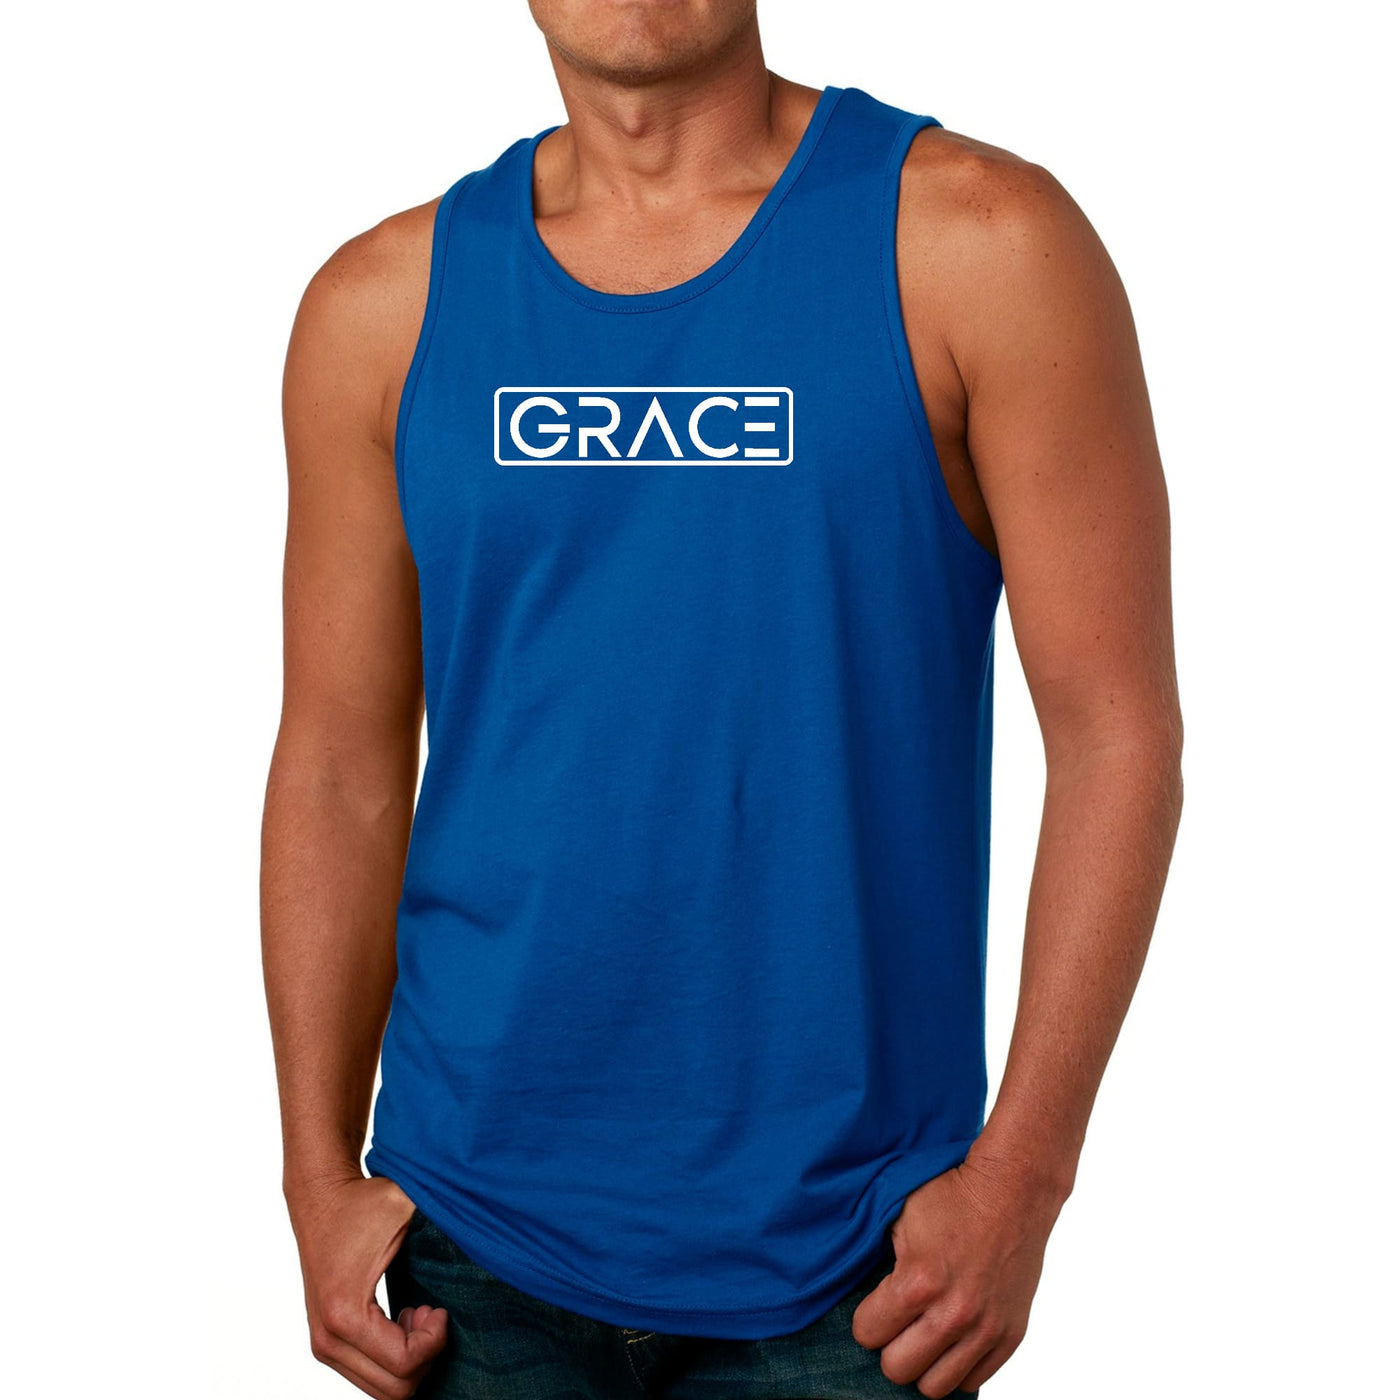 Mens Tank Top Fitness T - shirt Grace - Tops